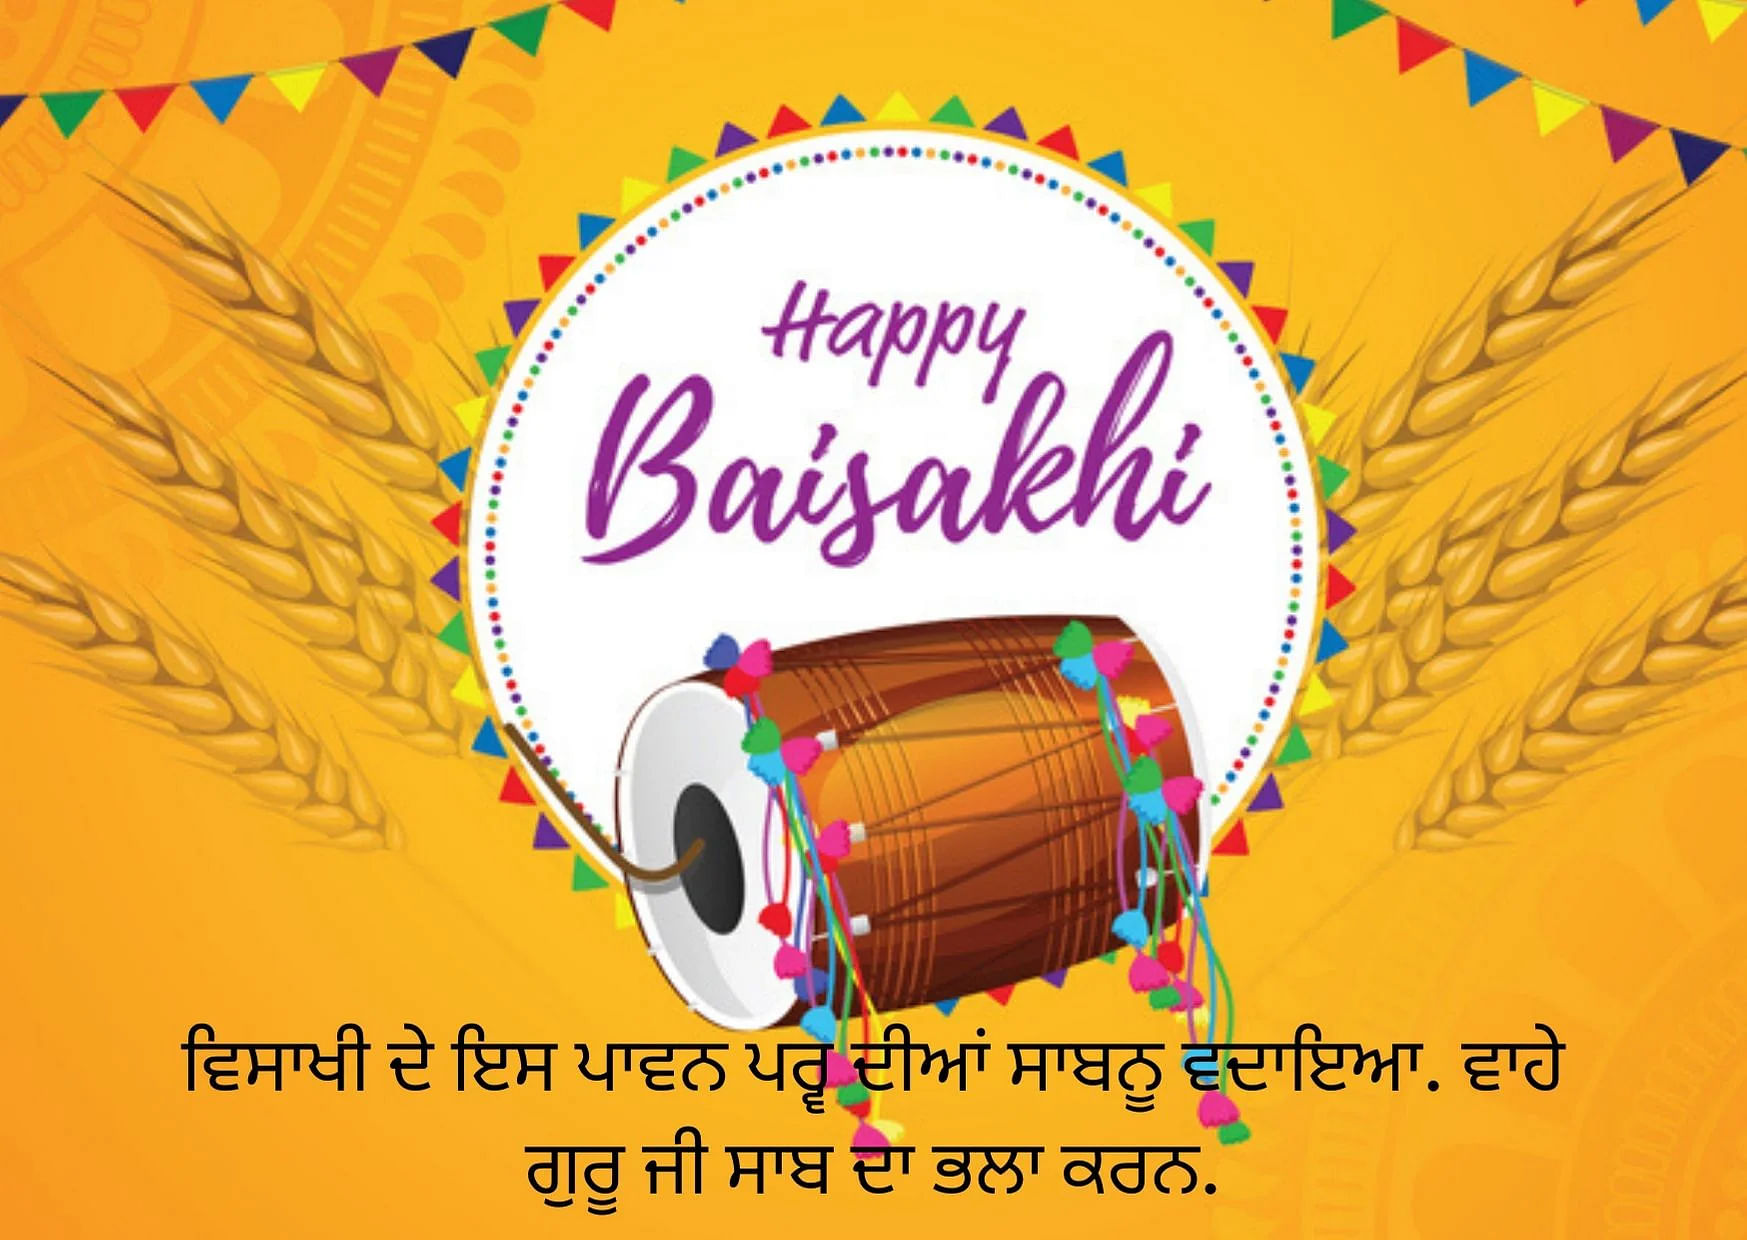 Happy Baisakhi Wishes in English, Hindi, Happy Vaisakhi 2021 Greetings